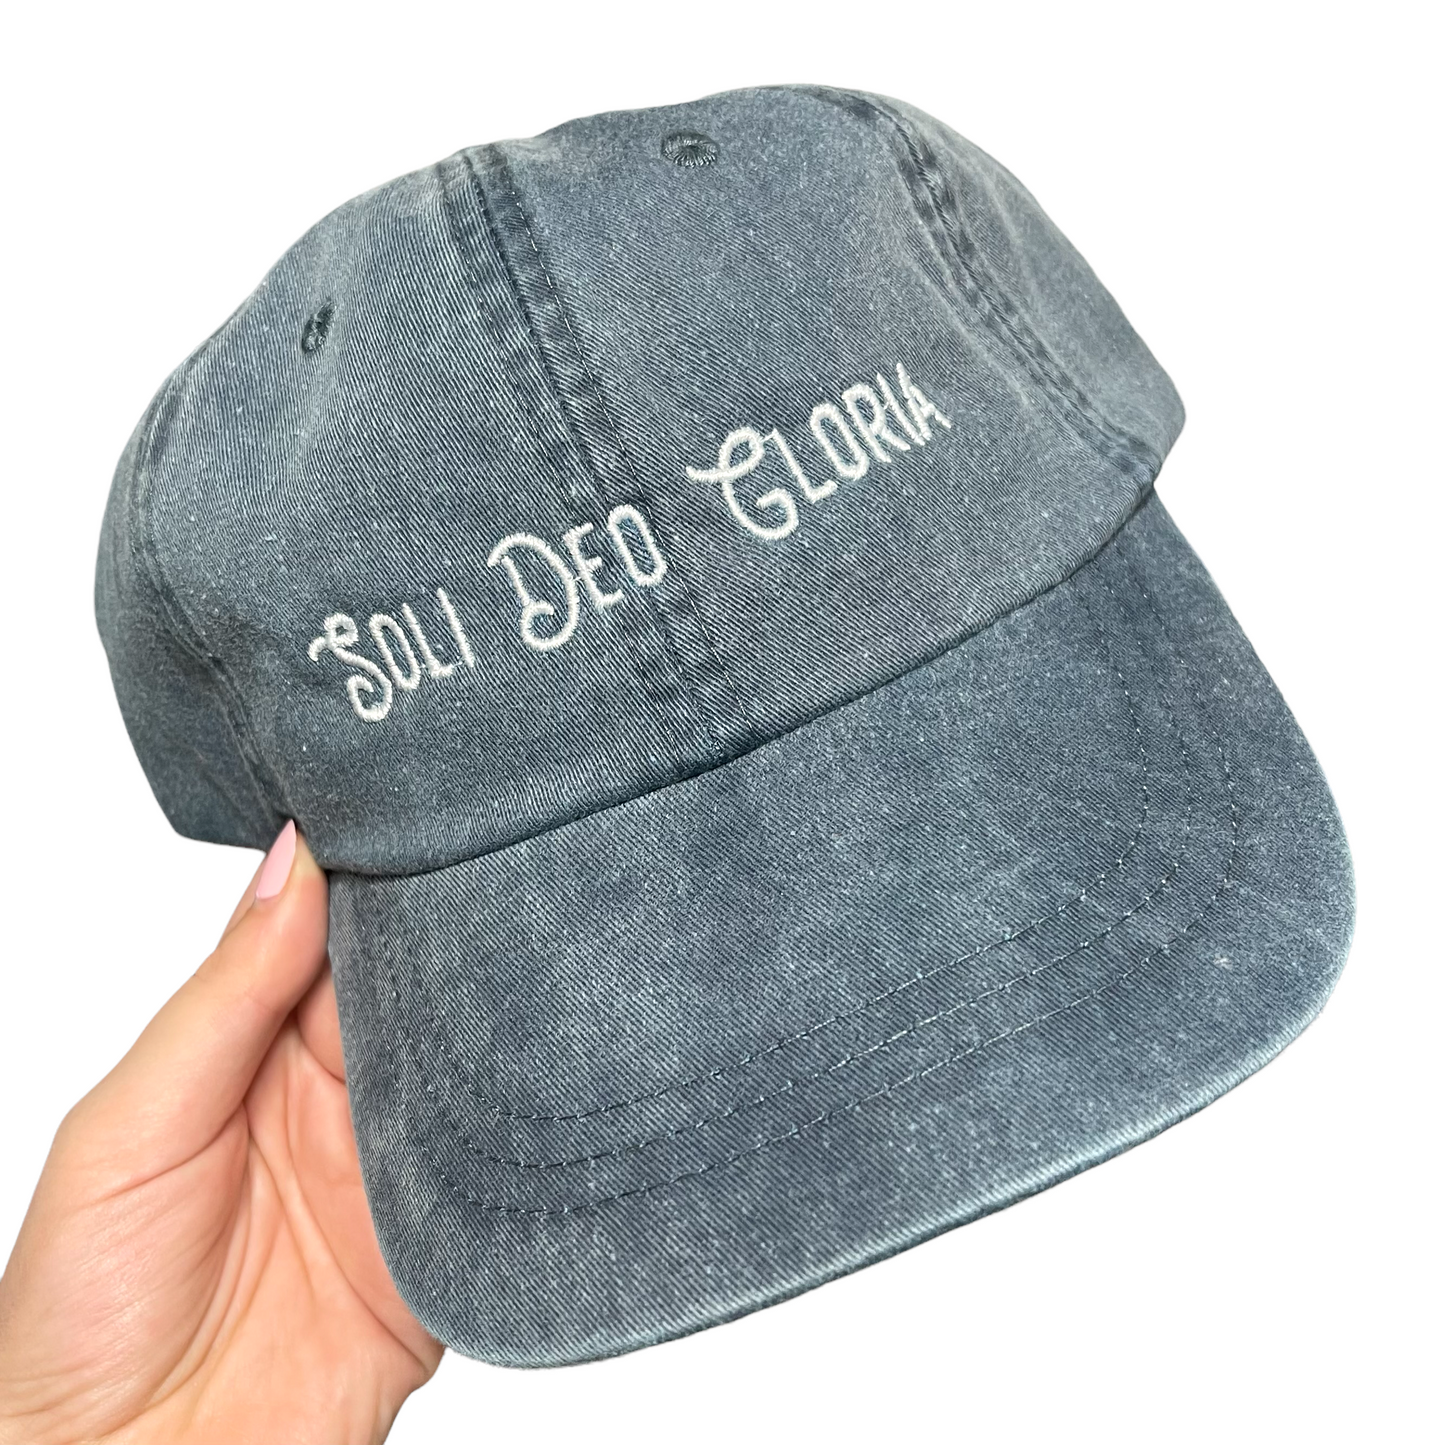 Soli Deo Gloria | Hat